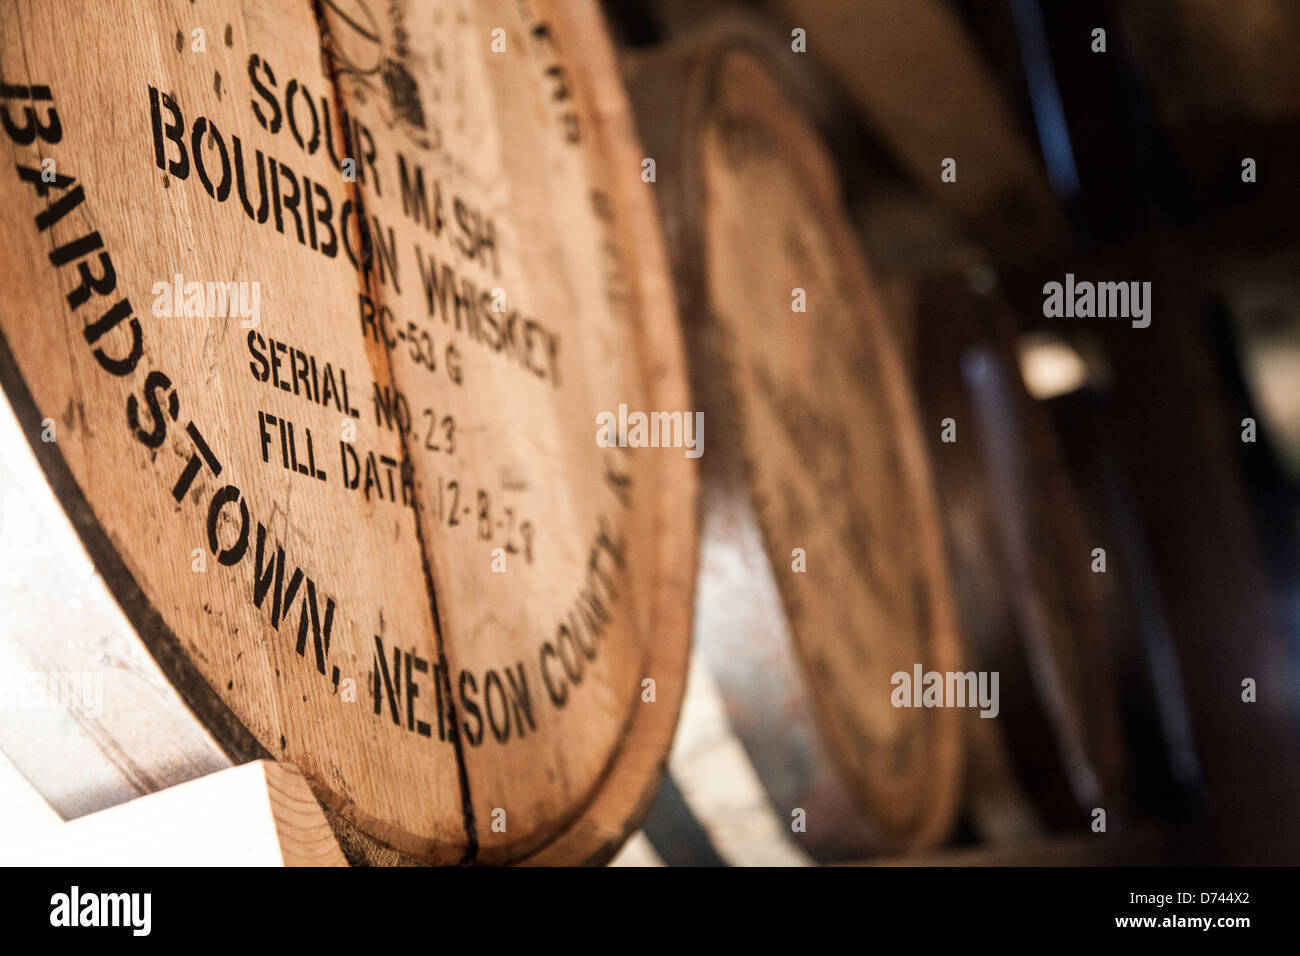 Wooden bourbon barrel Stock Photo